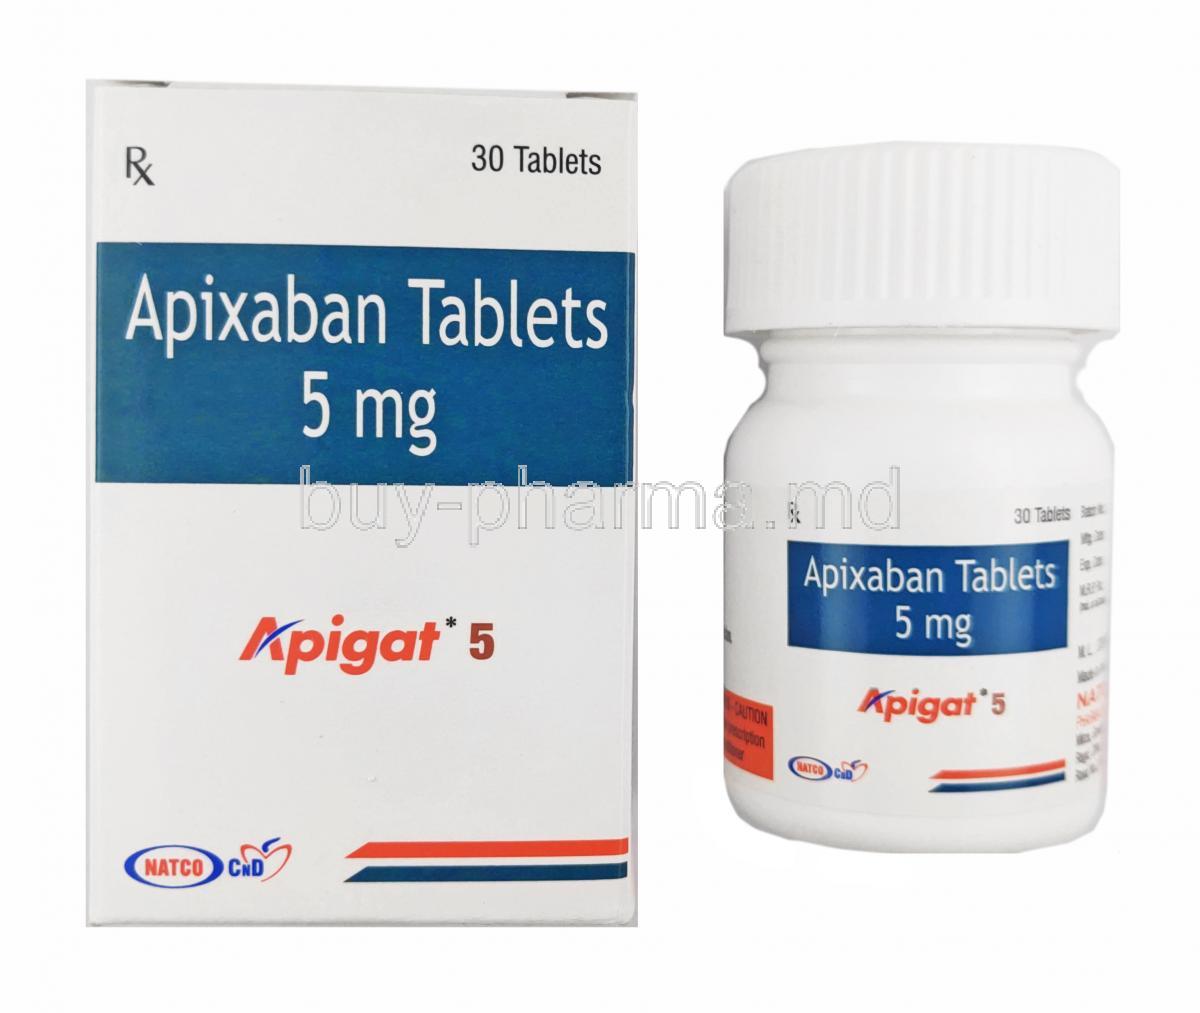 Apigat, Apixaban 5mg box and tablet bottle